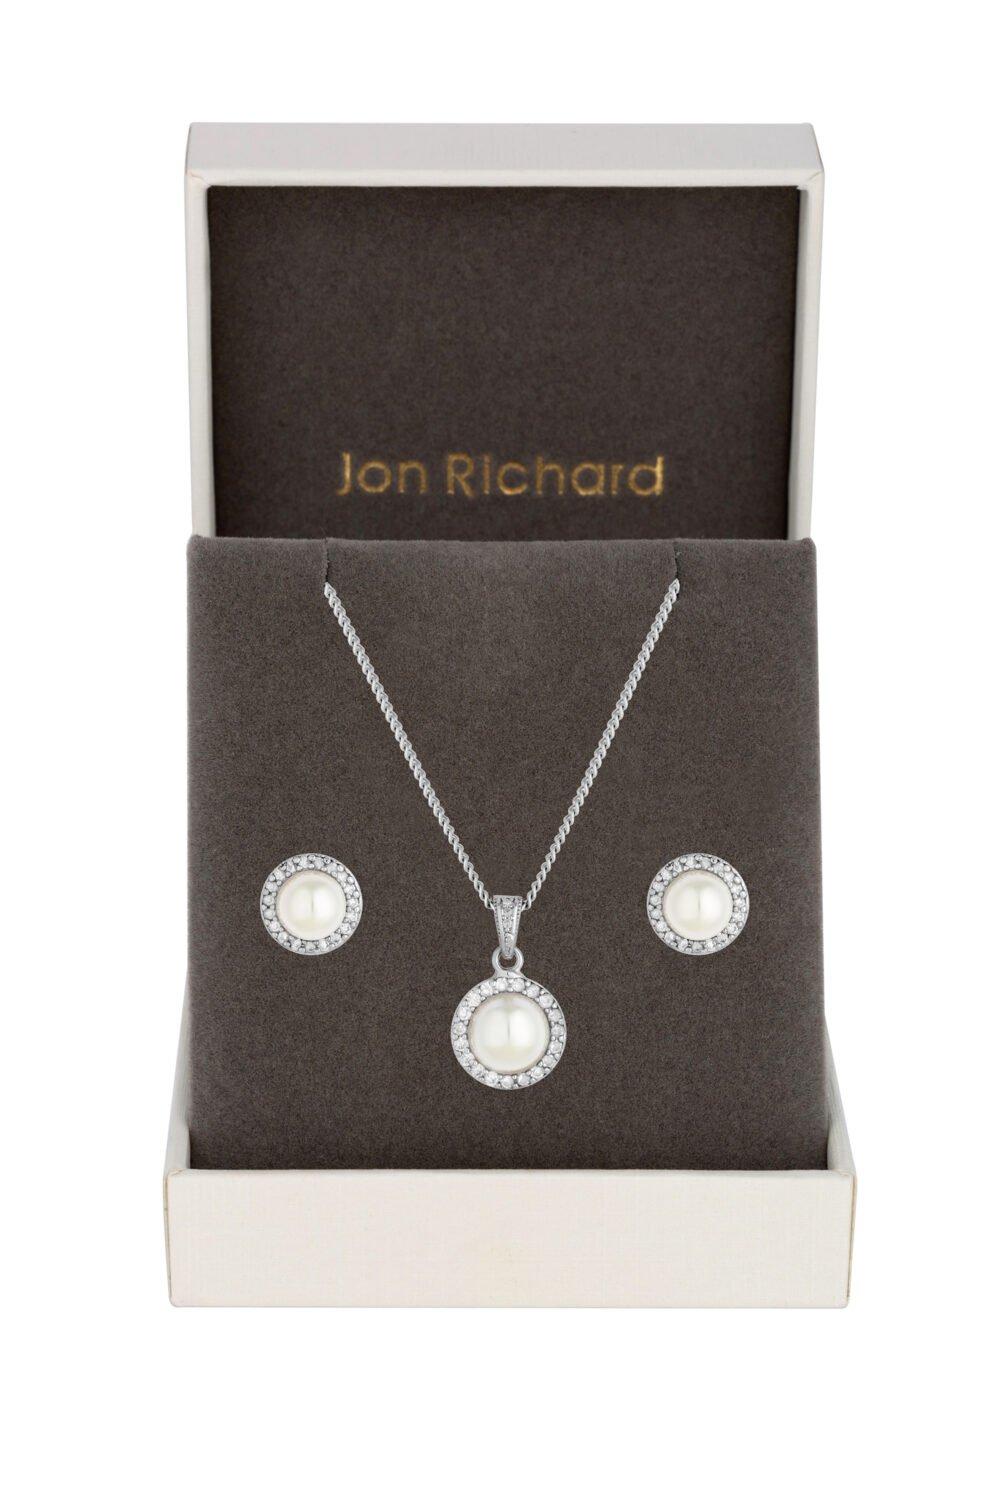 Jon Richard Jon Richard Rhodium Plated Cubic Zirconia And Pearl Set - Gift Boxed